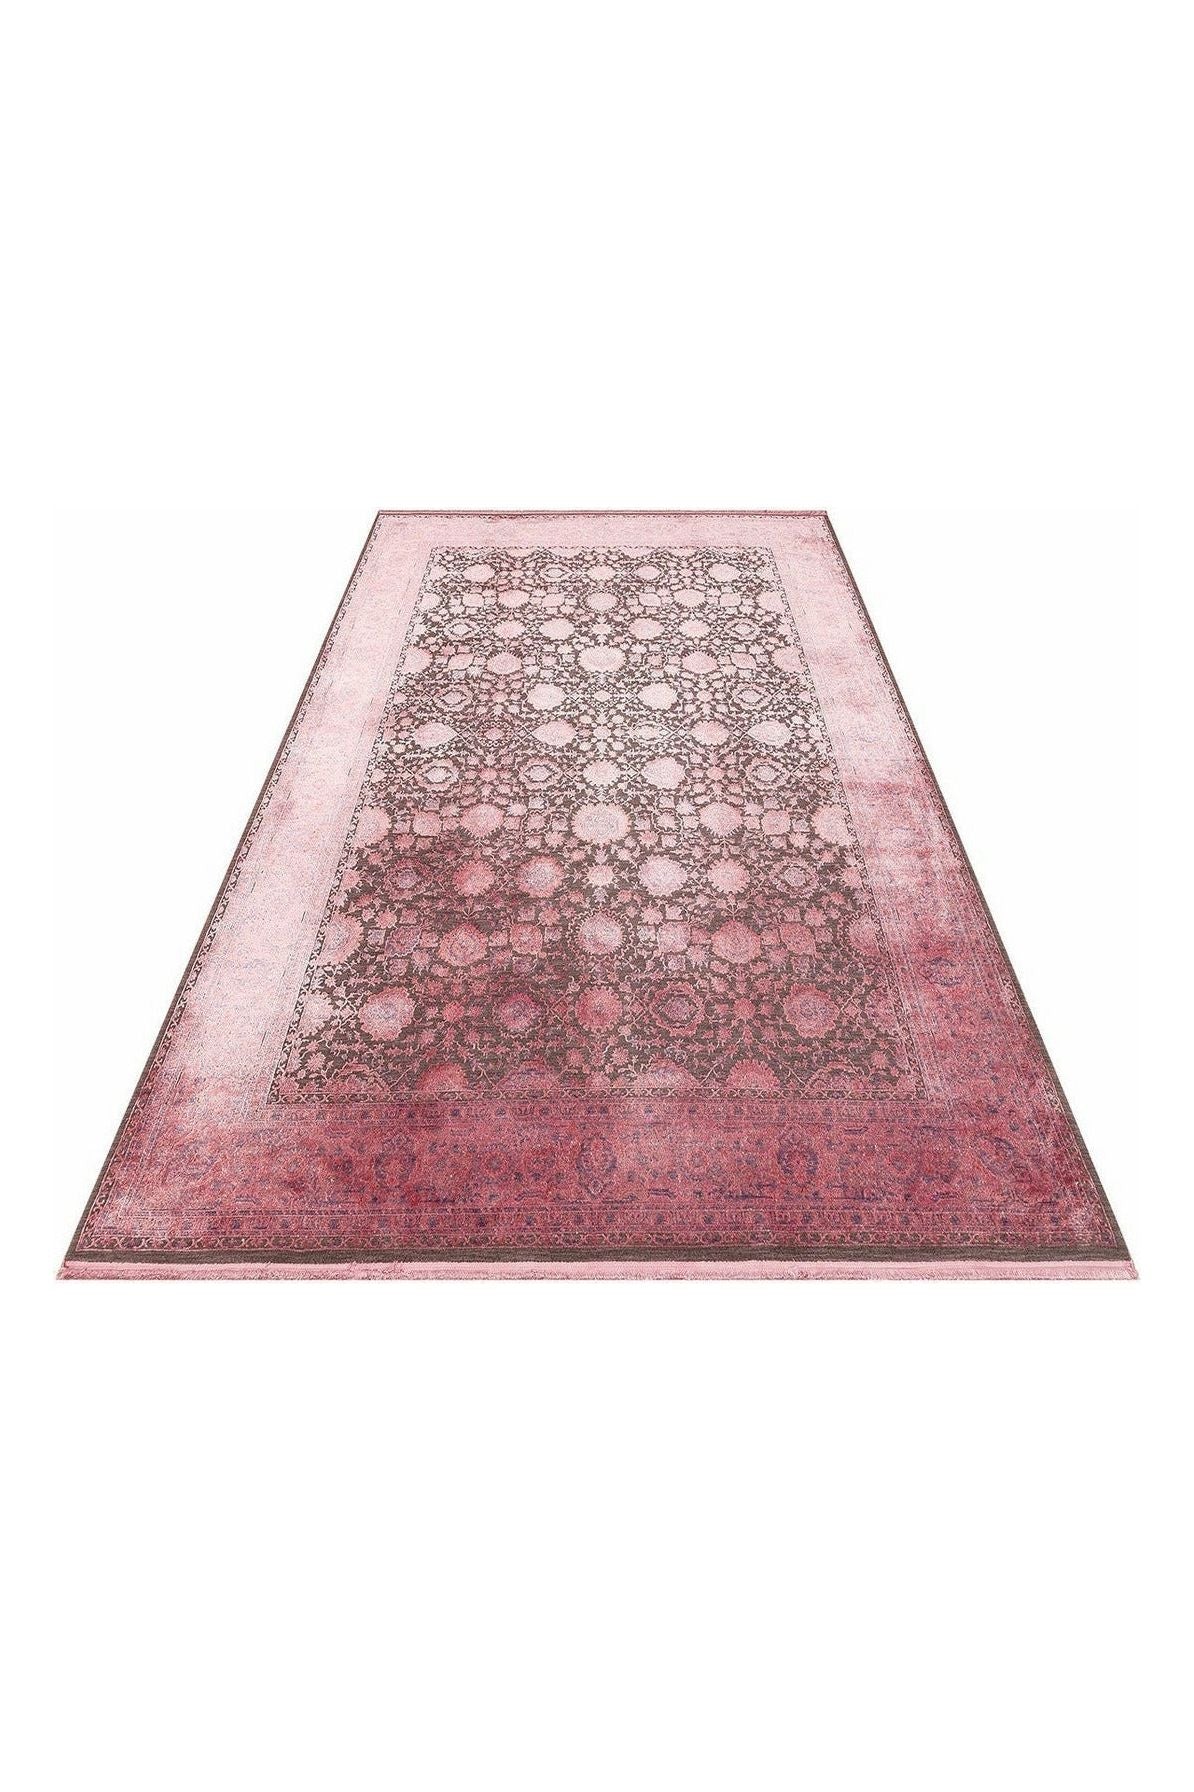 #Turkish_Carpets_Rugs# #Modern_Carpets# #Abrash_Carpets#Lhr 01 Fuschia